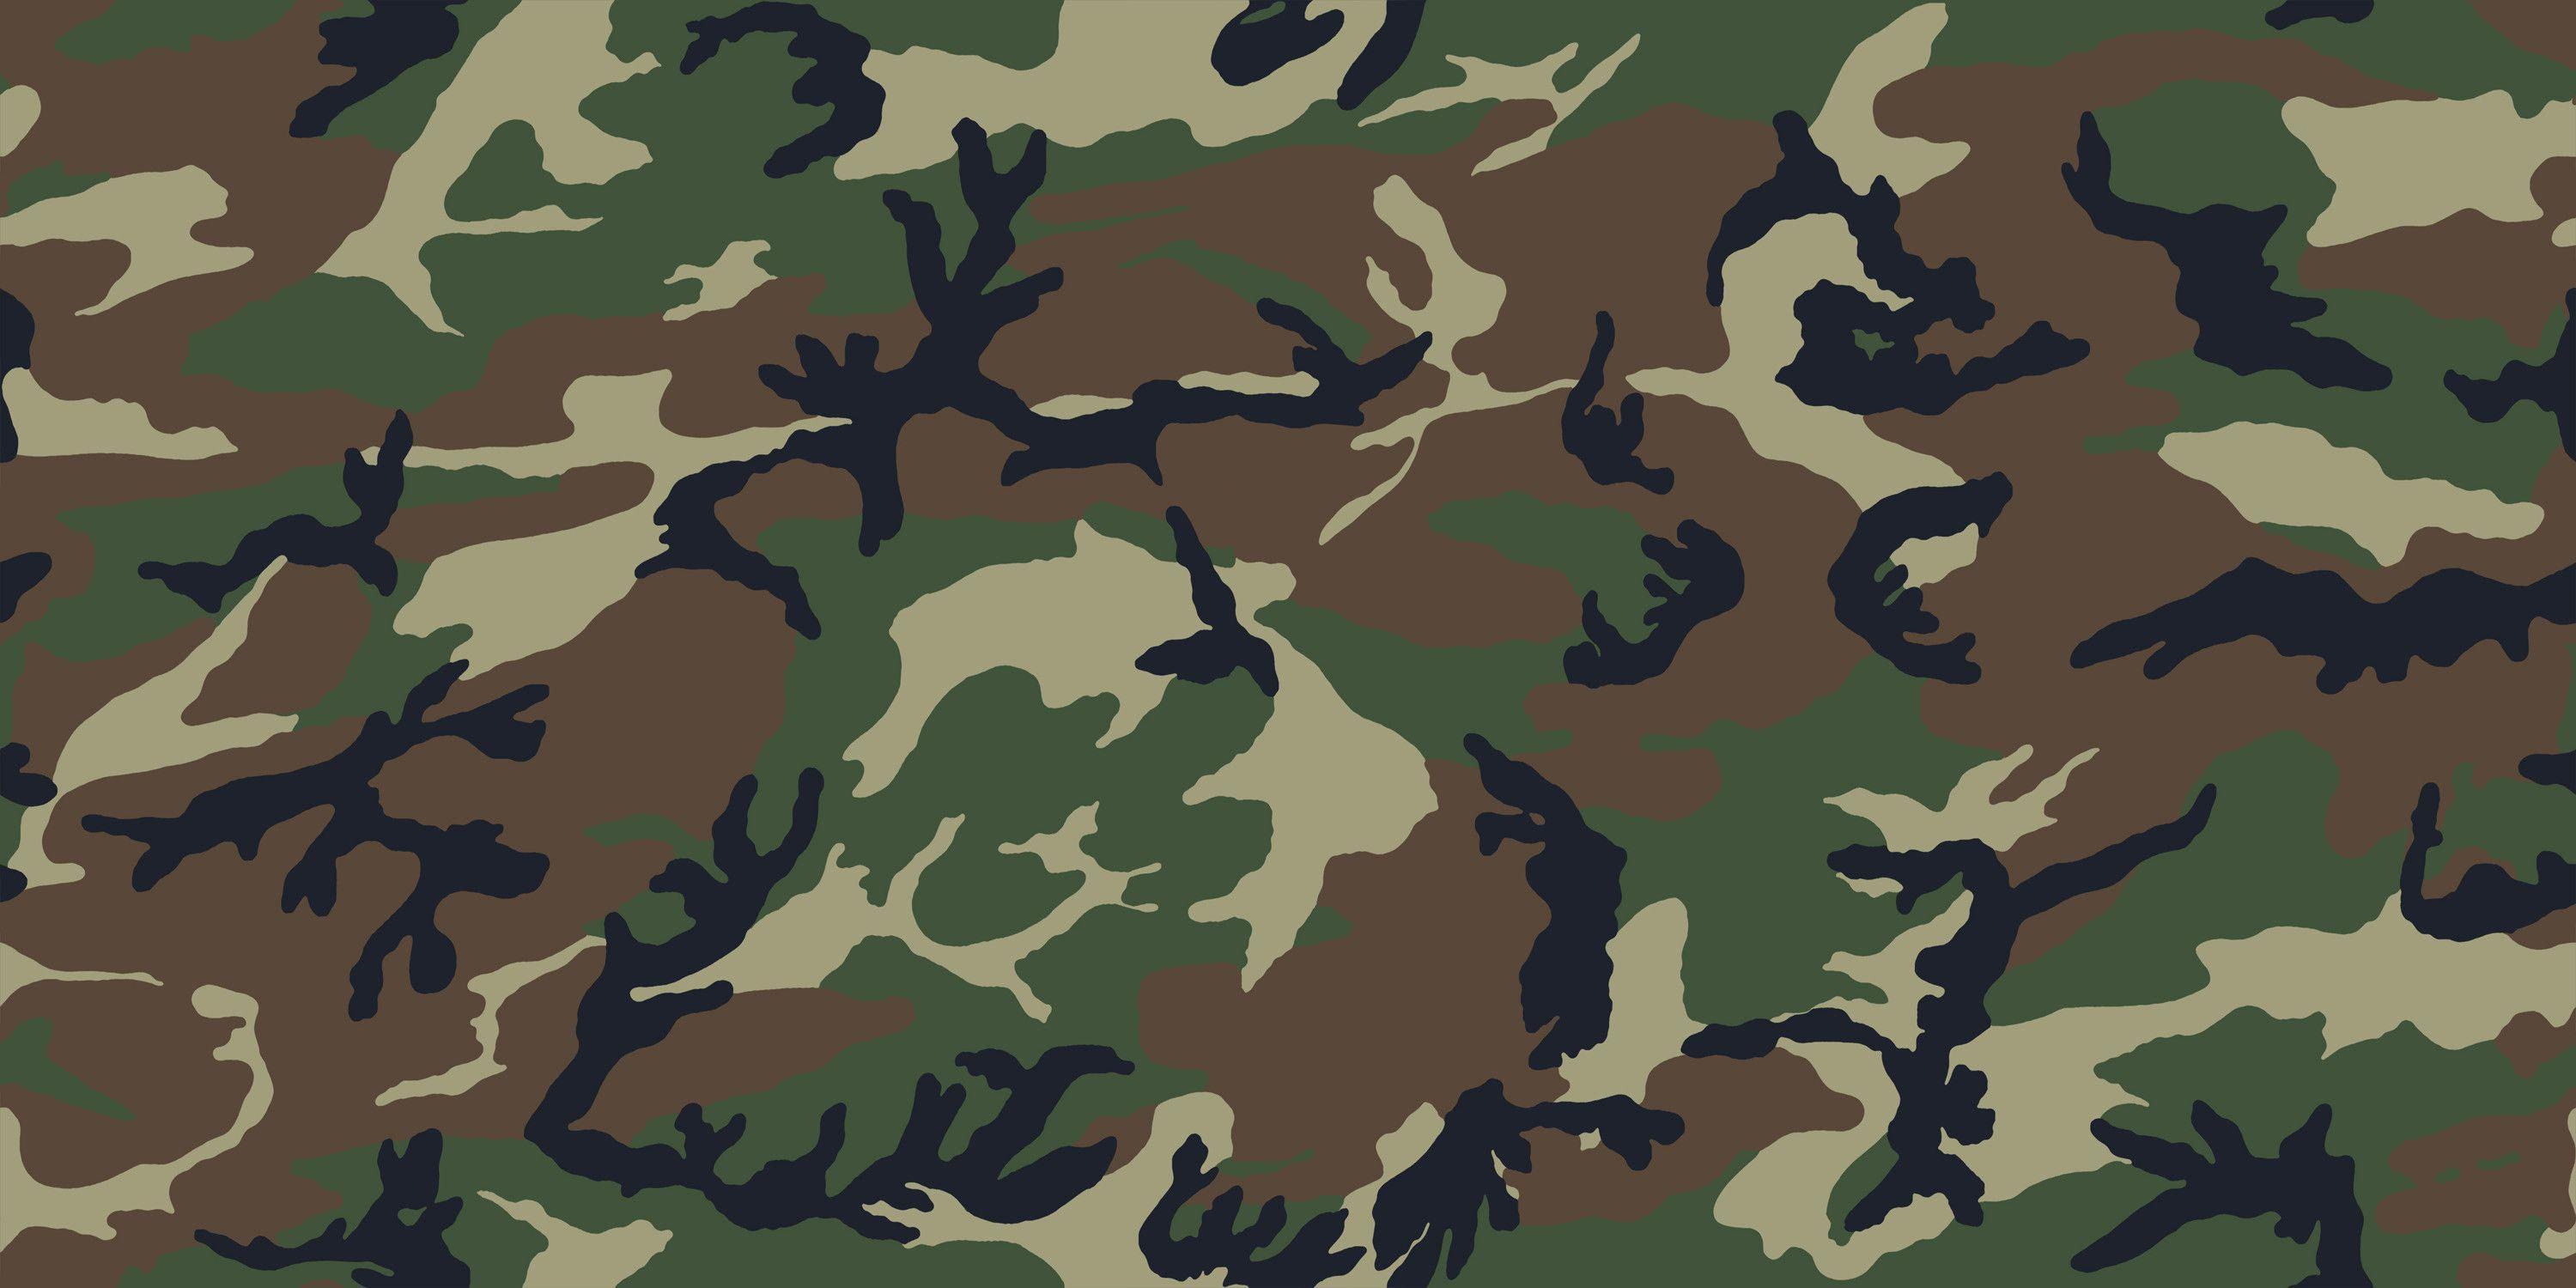 Free Army Camo Wallpaper, Live Army Camo Wallpaper, CBE89 Army